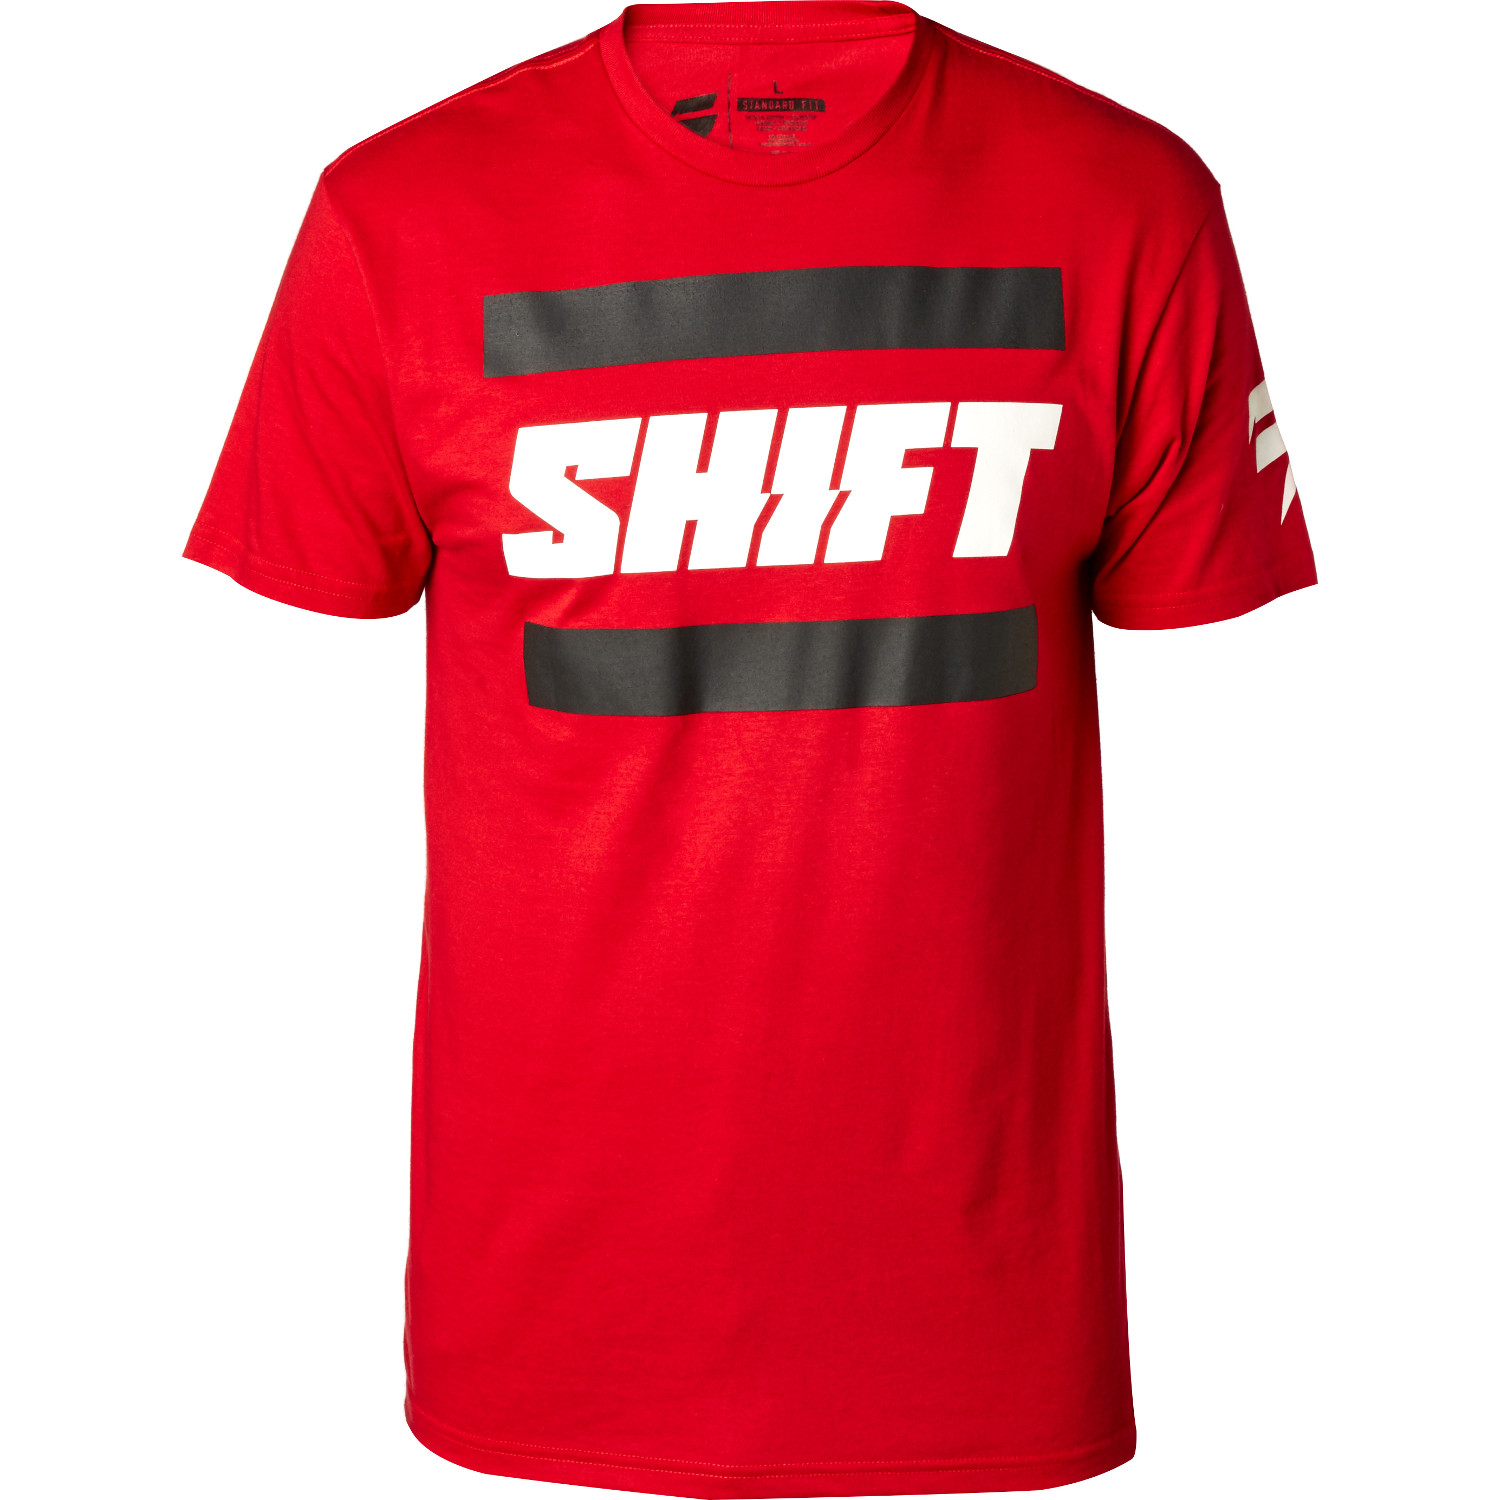 Shift T-Shirt 3lack Label Dark Red